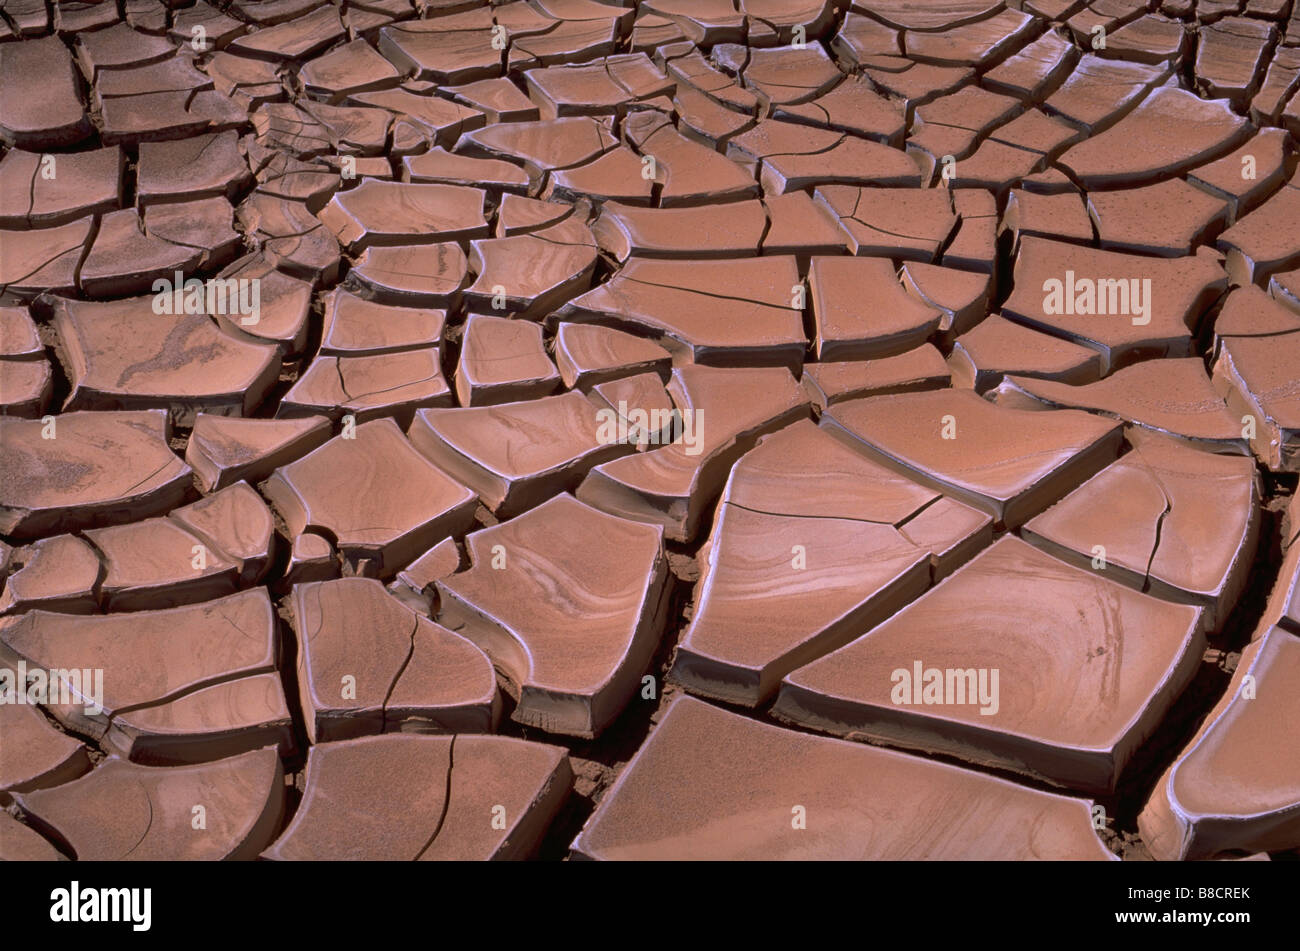 FV0036, Dave Nunuk; Dried mud, acama desert, Chile Stock Photo